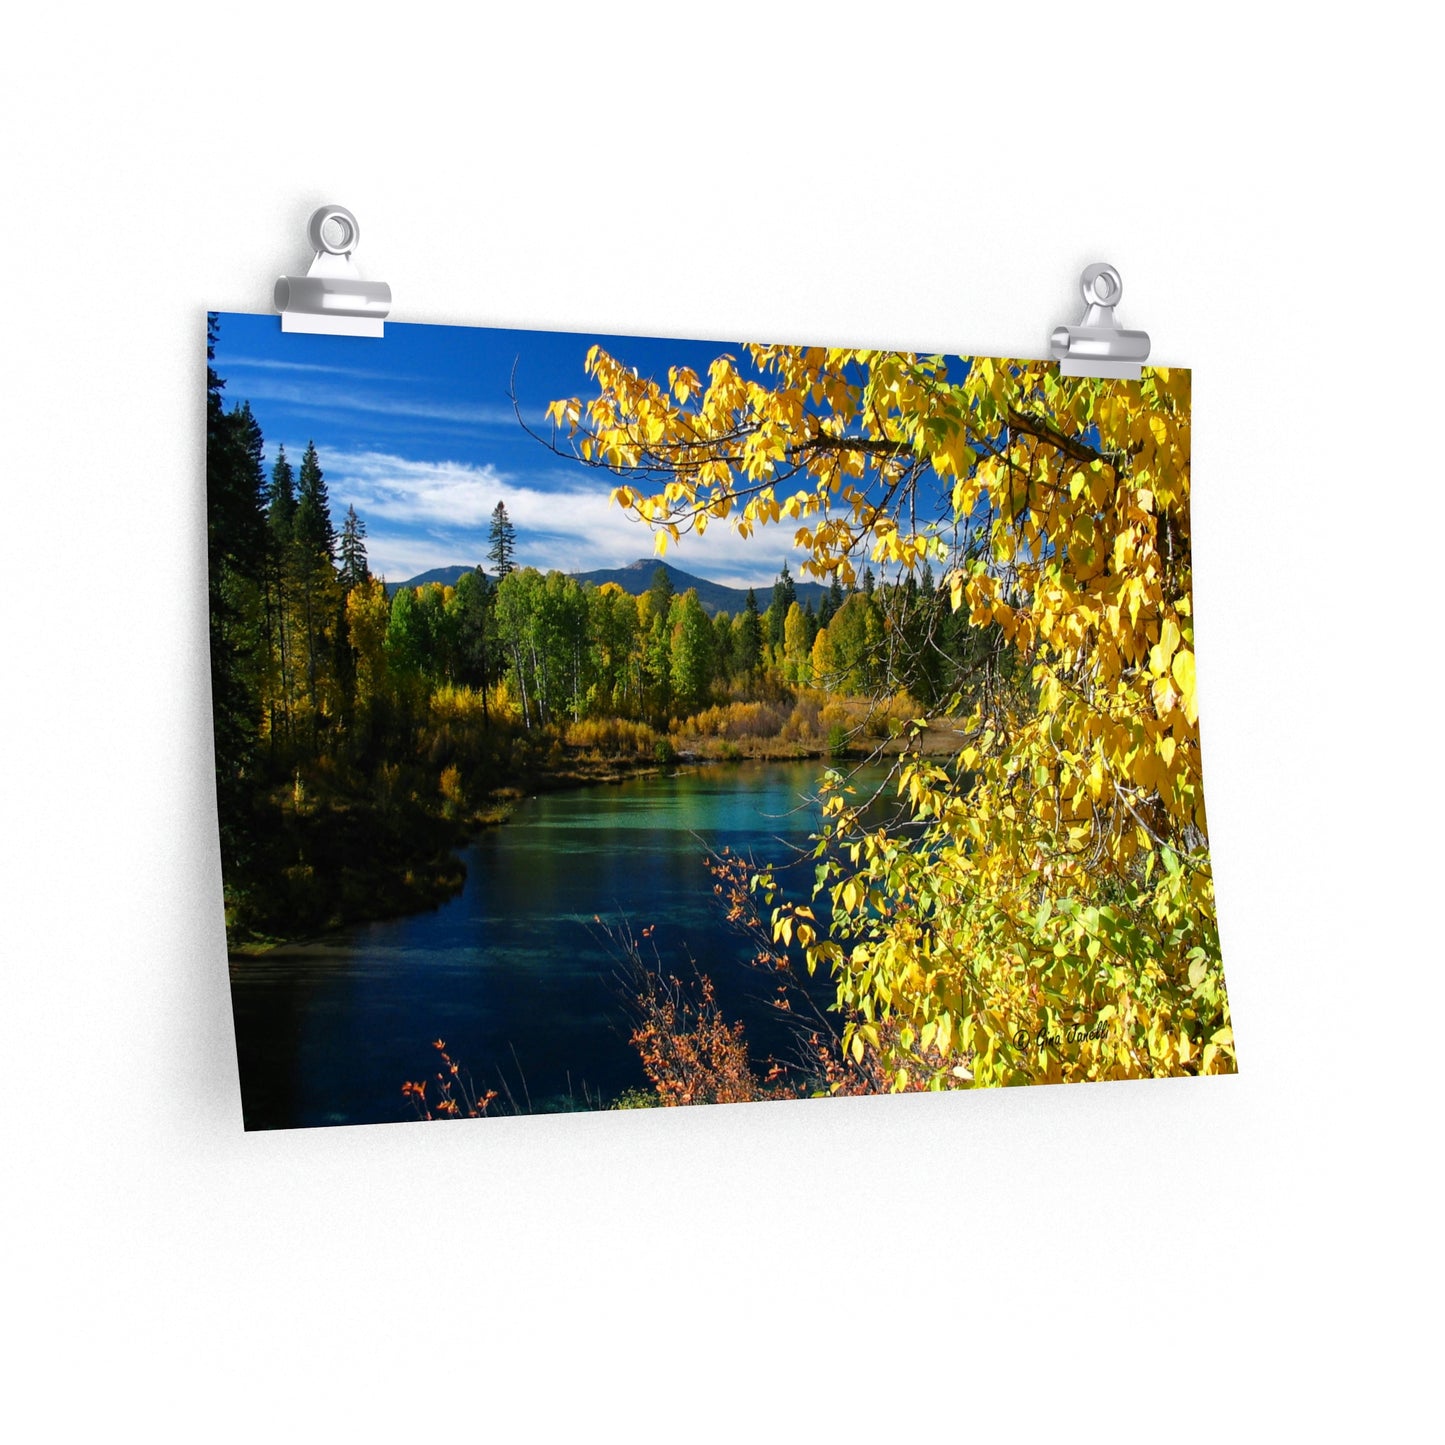 Wood River, Kimball State Park, Ft. Klamath Or. Premium Matte horizontal posters